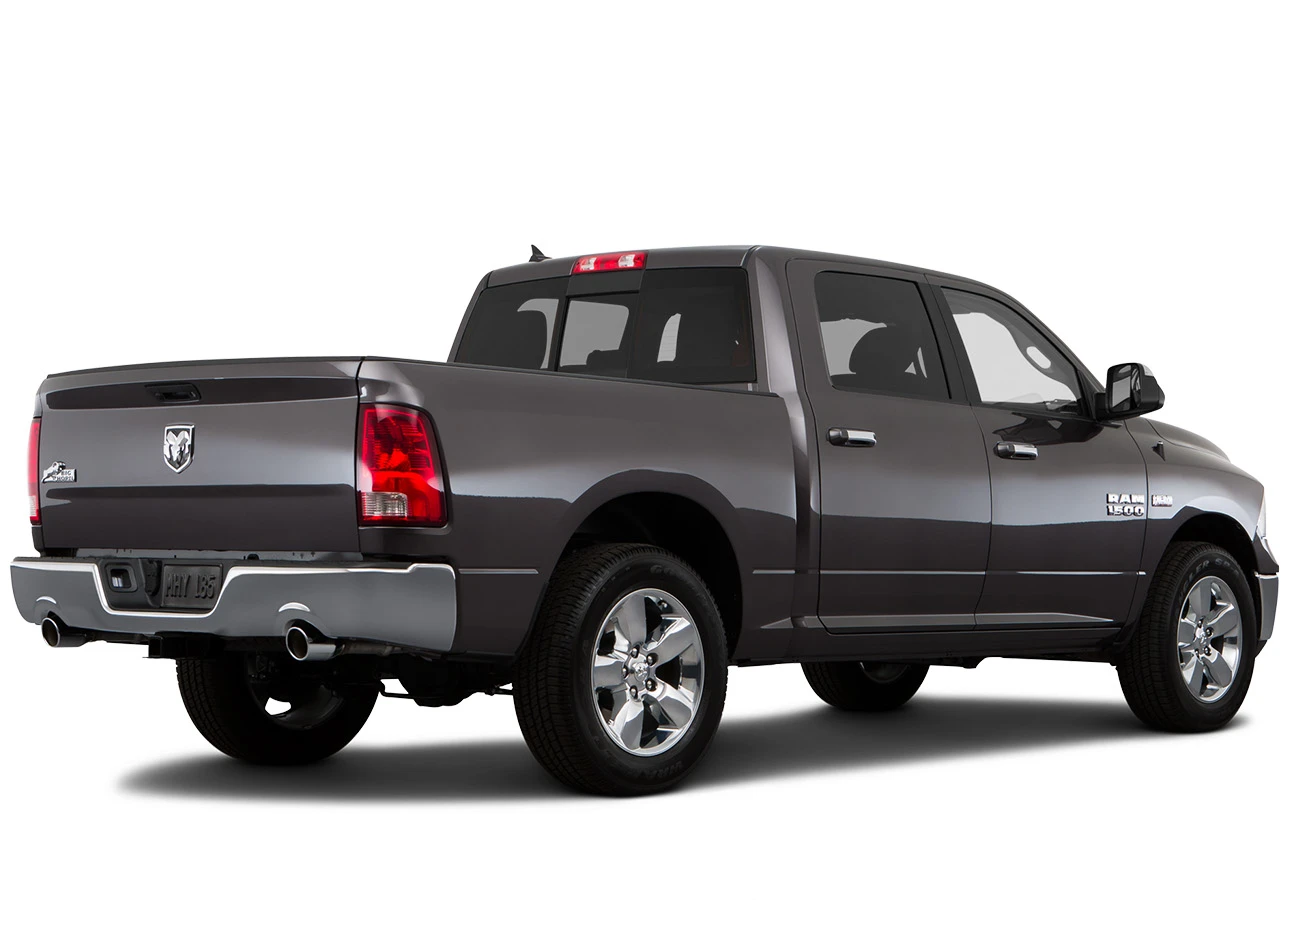 2015 RAM 1500: Rear of Truck | CarMax